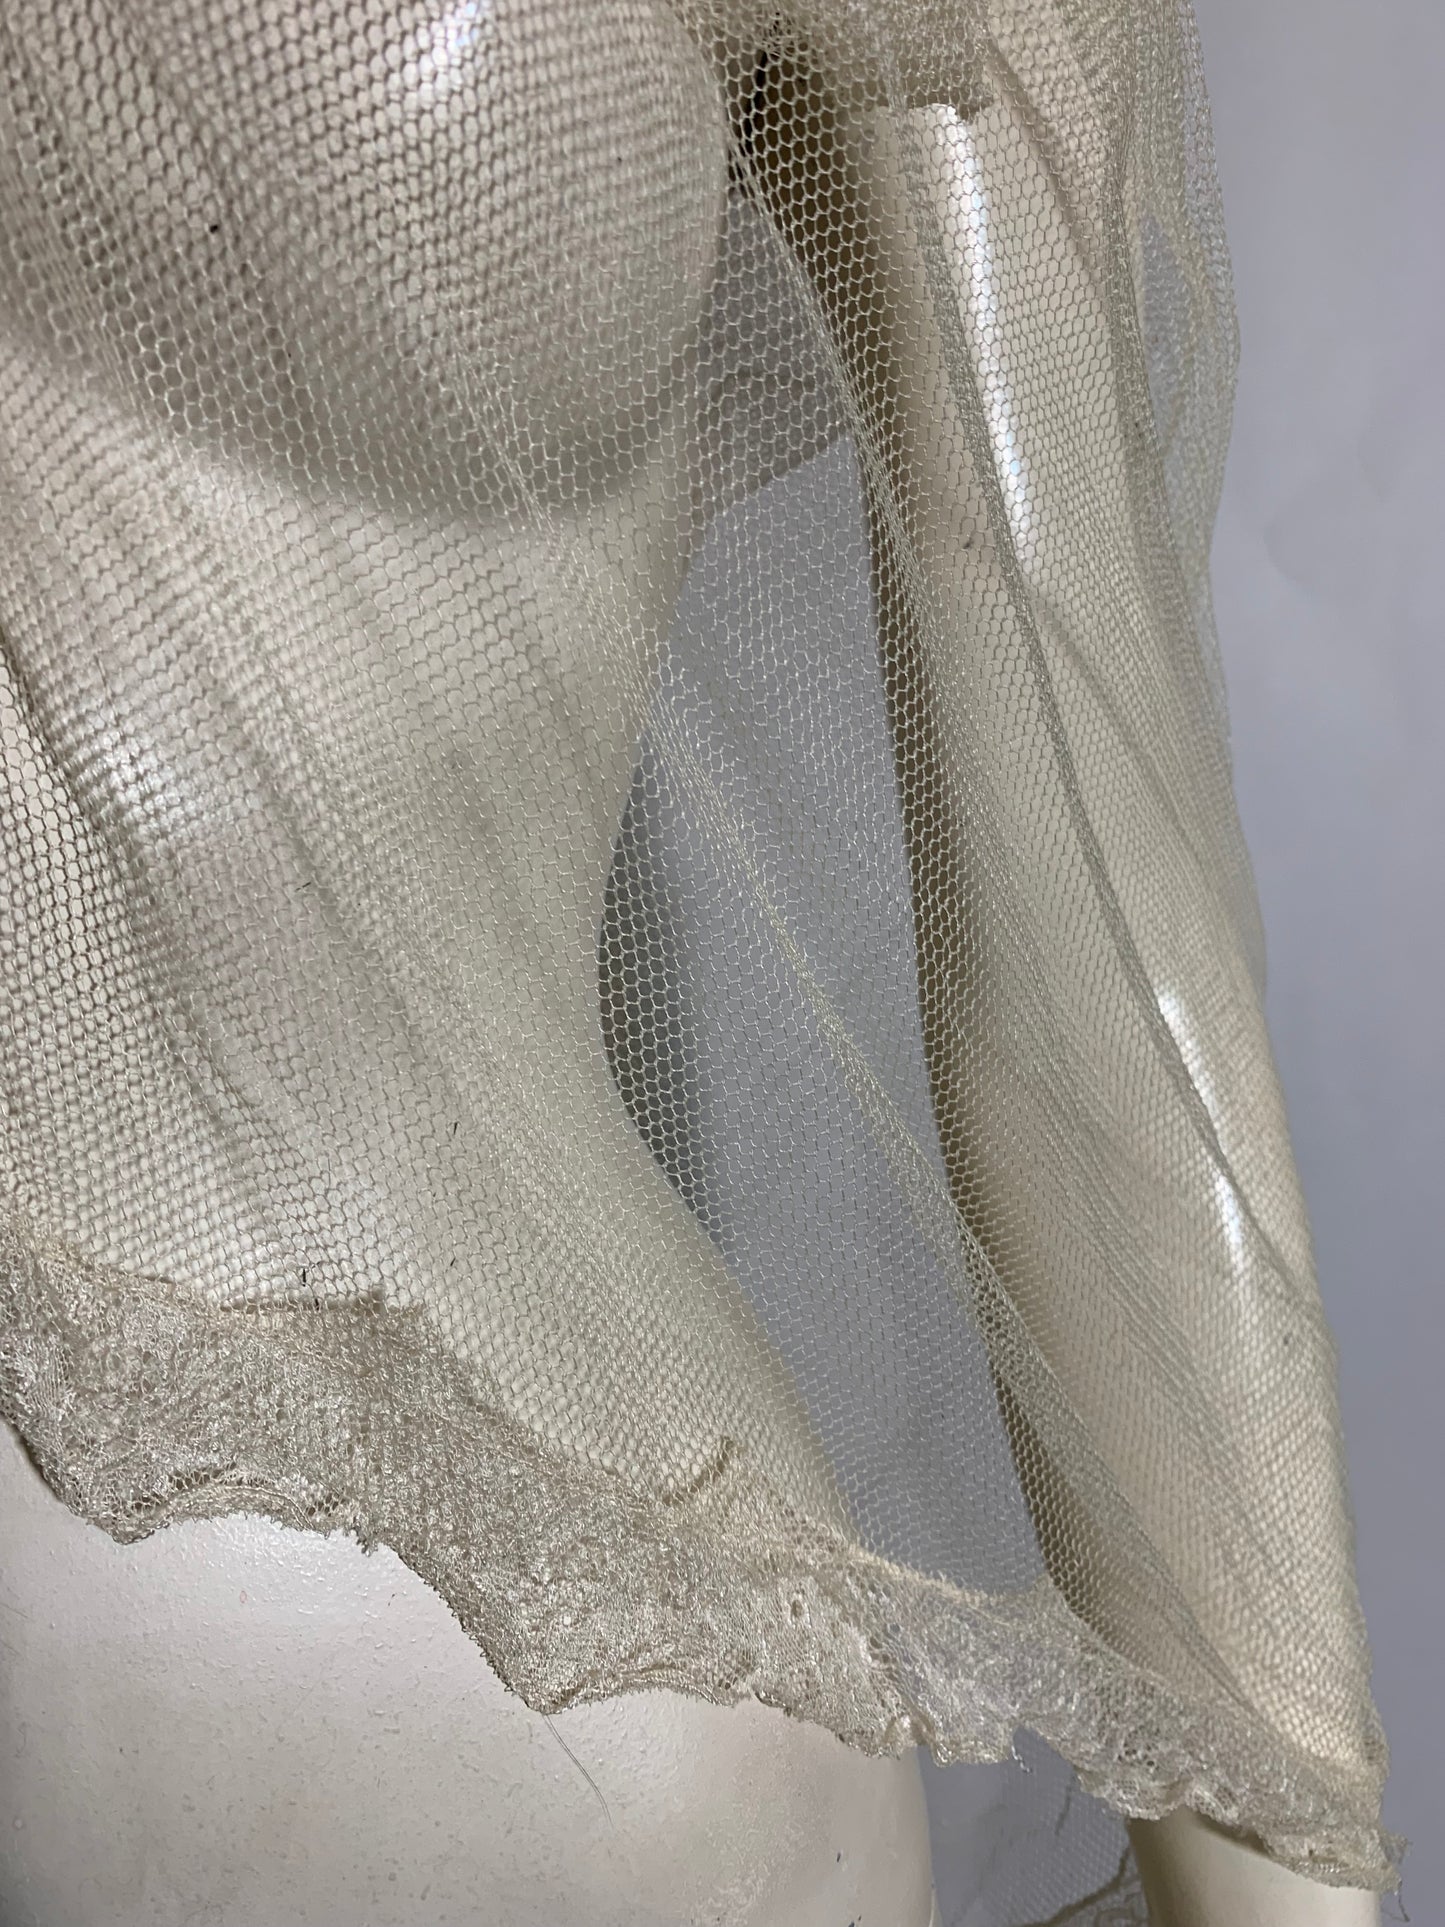 Lace Trimmed Mesh Bridal Veil or Wrap circa 1930s